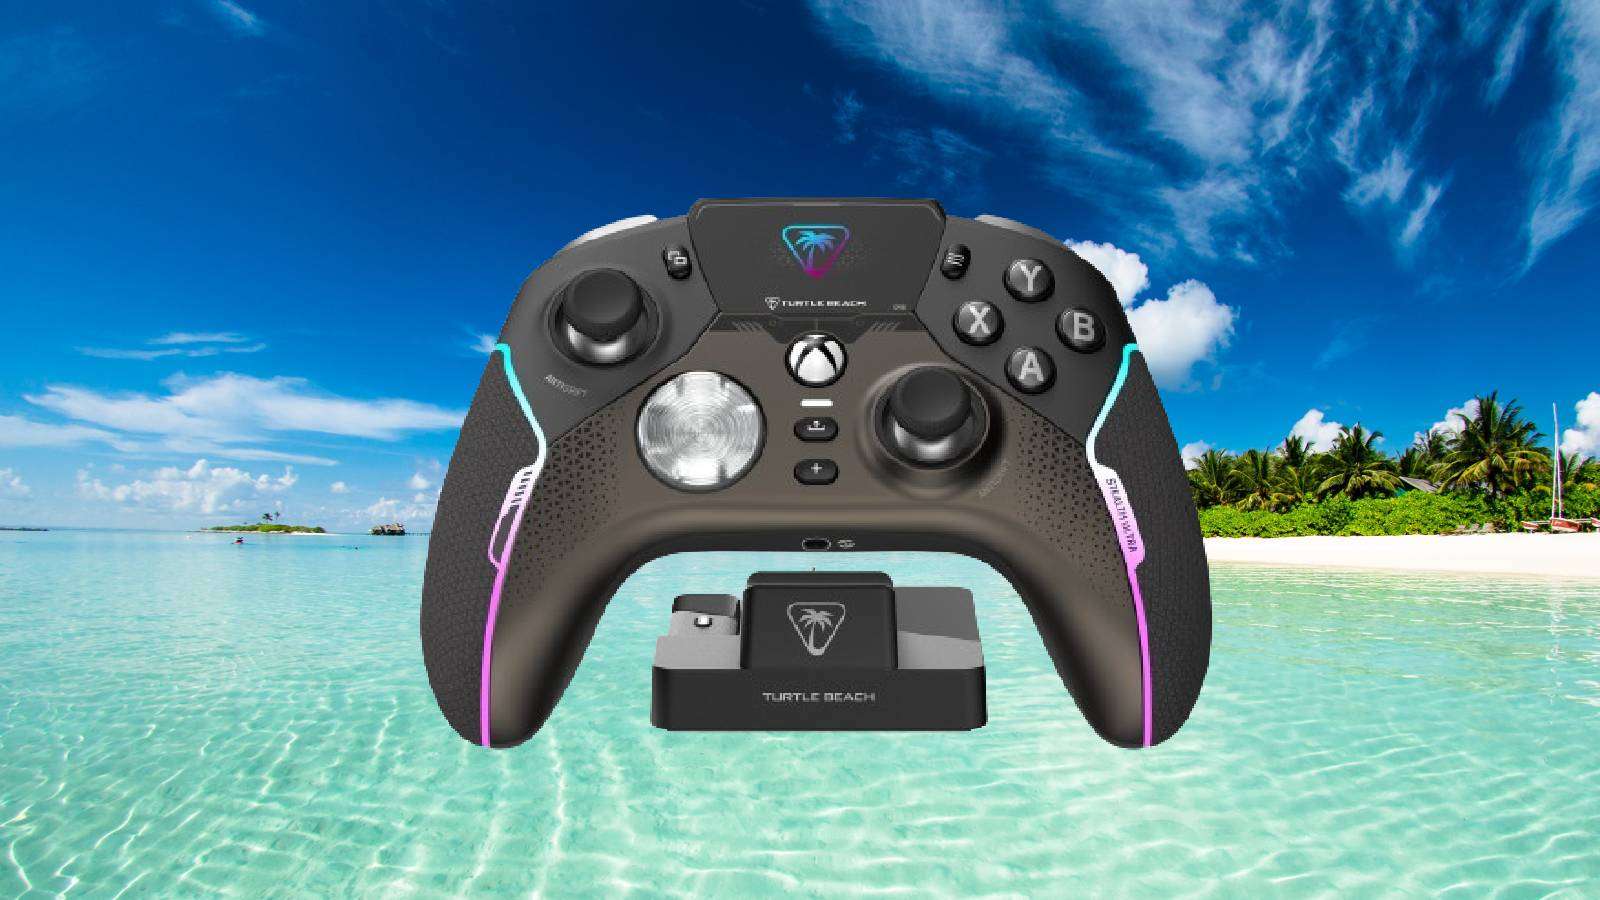 Turtle Beach Stealth Ultra wireless Xbox controller